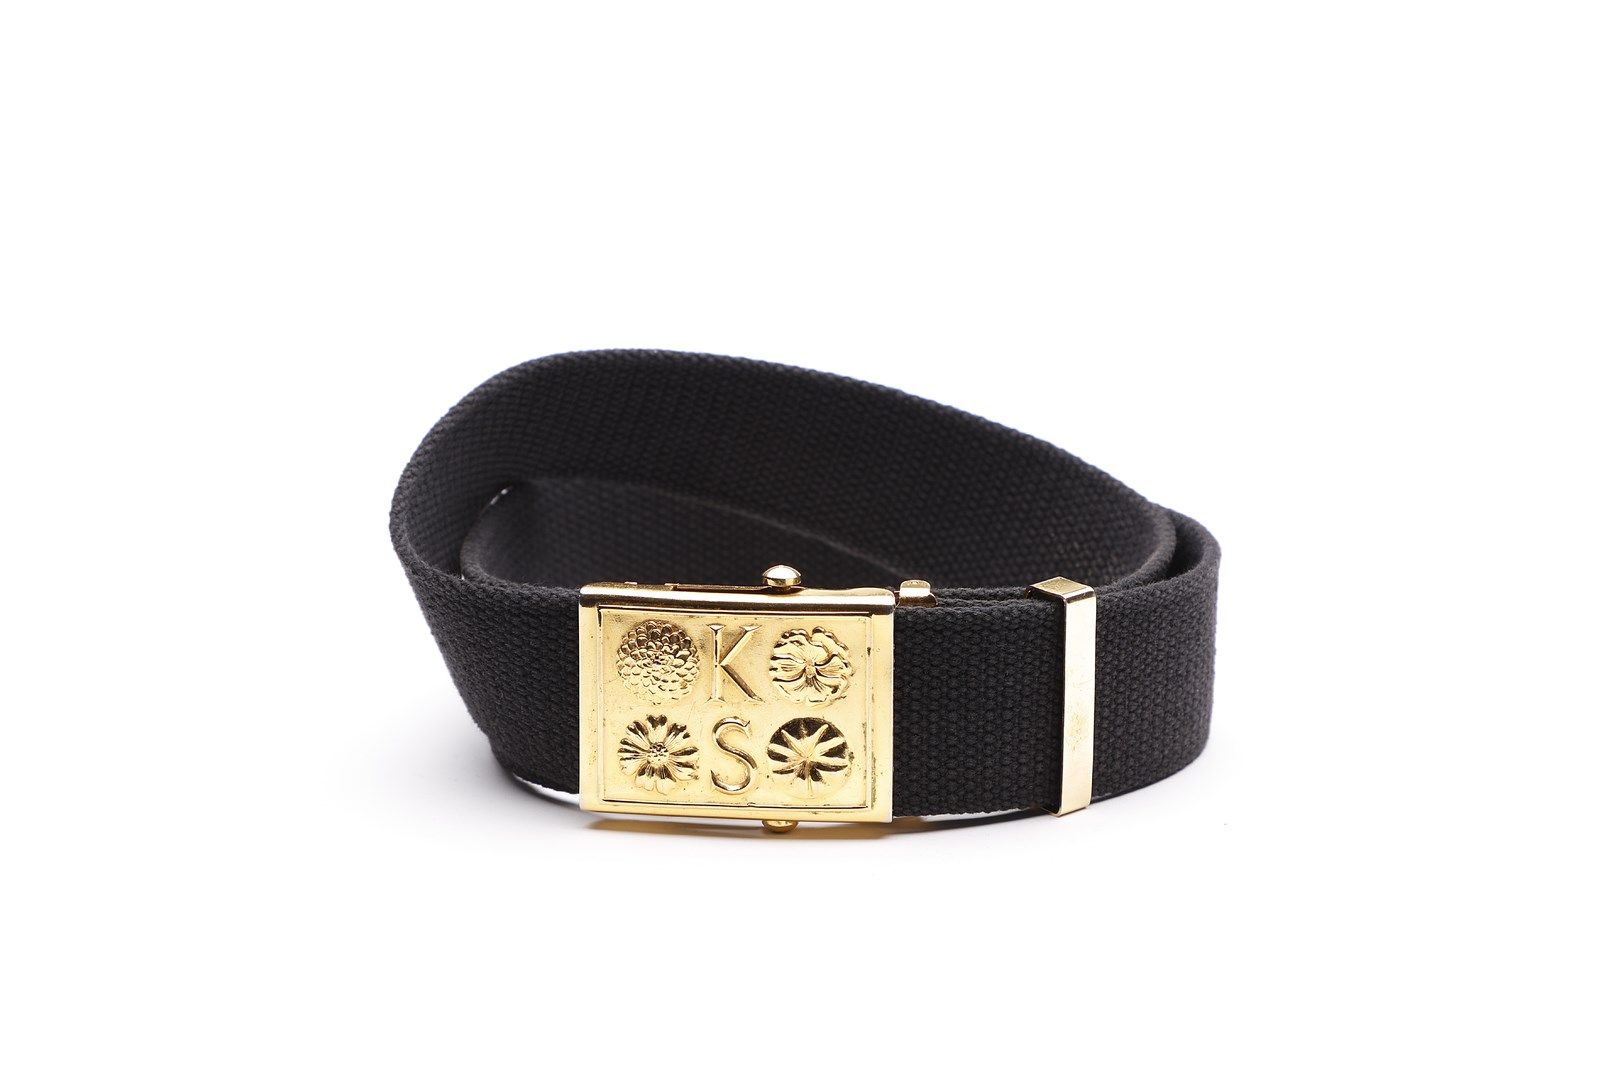 KEN SCOTT Black canvas belt with gold-colored metal buckle. Cinturón de lona neg&hellip;